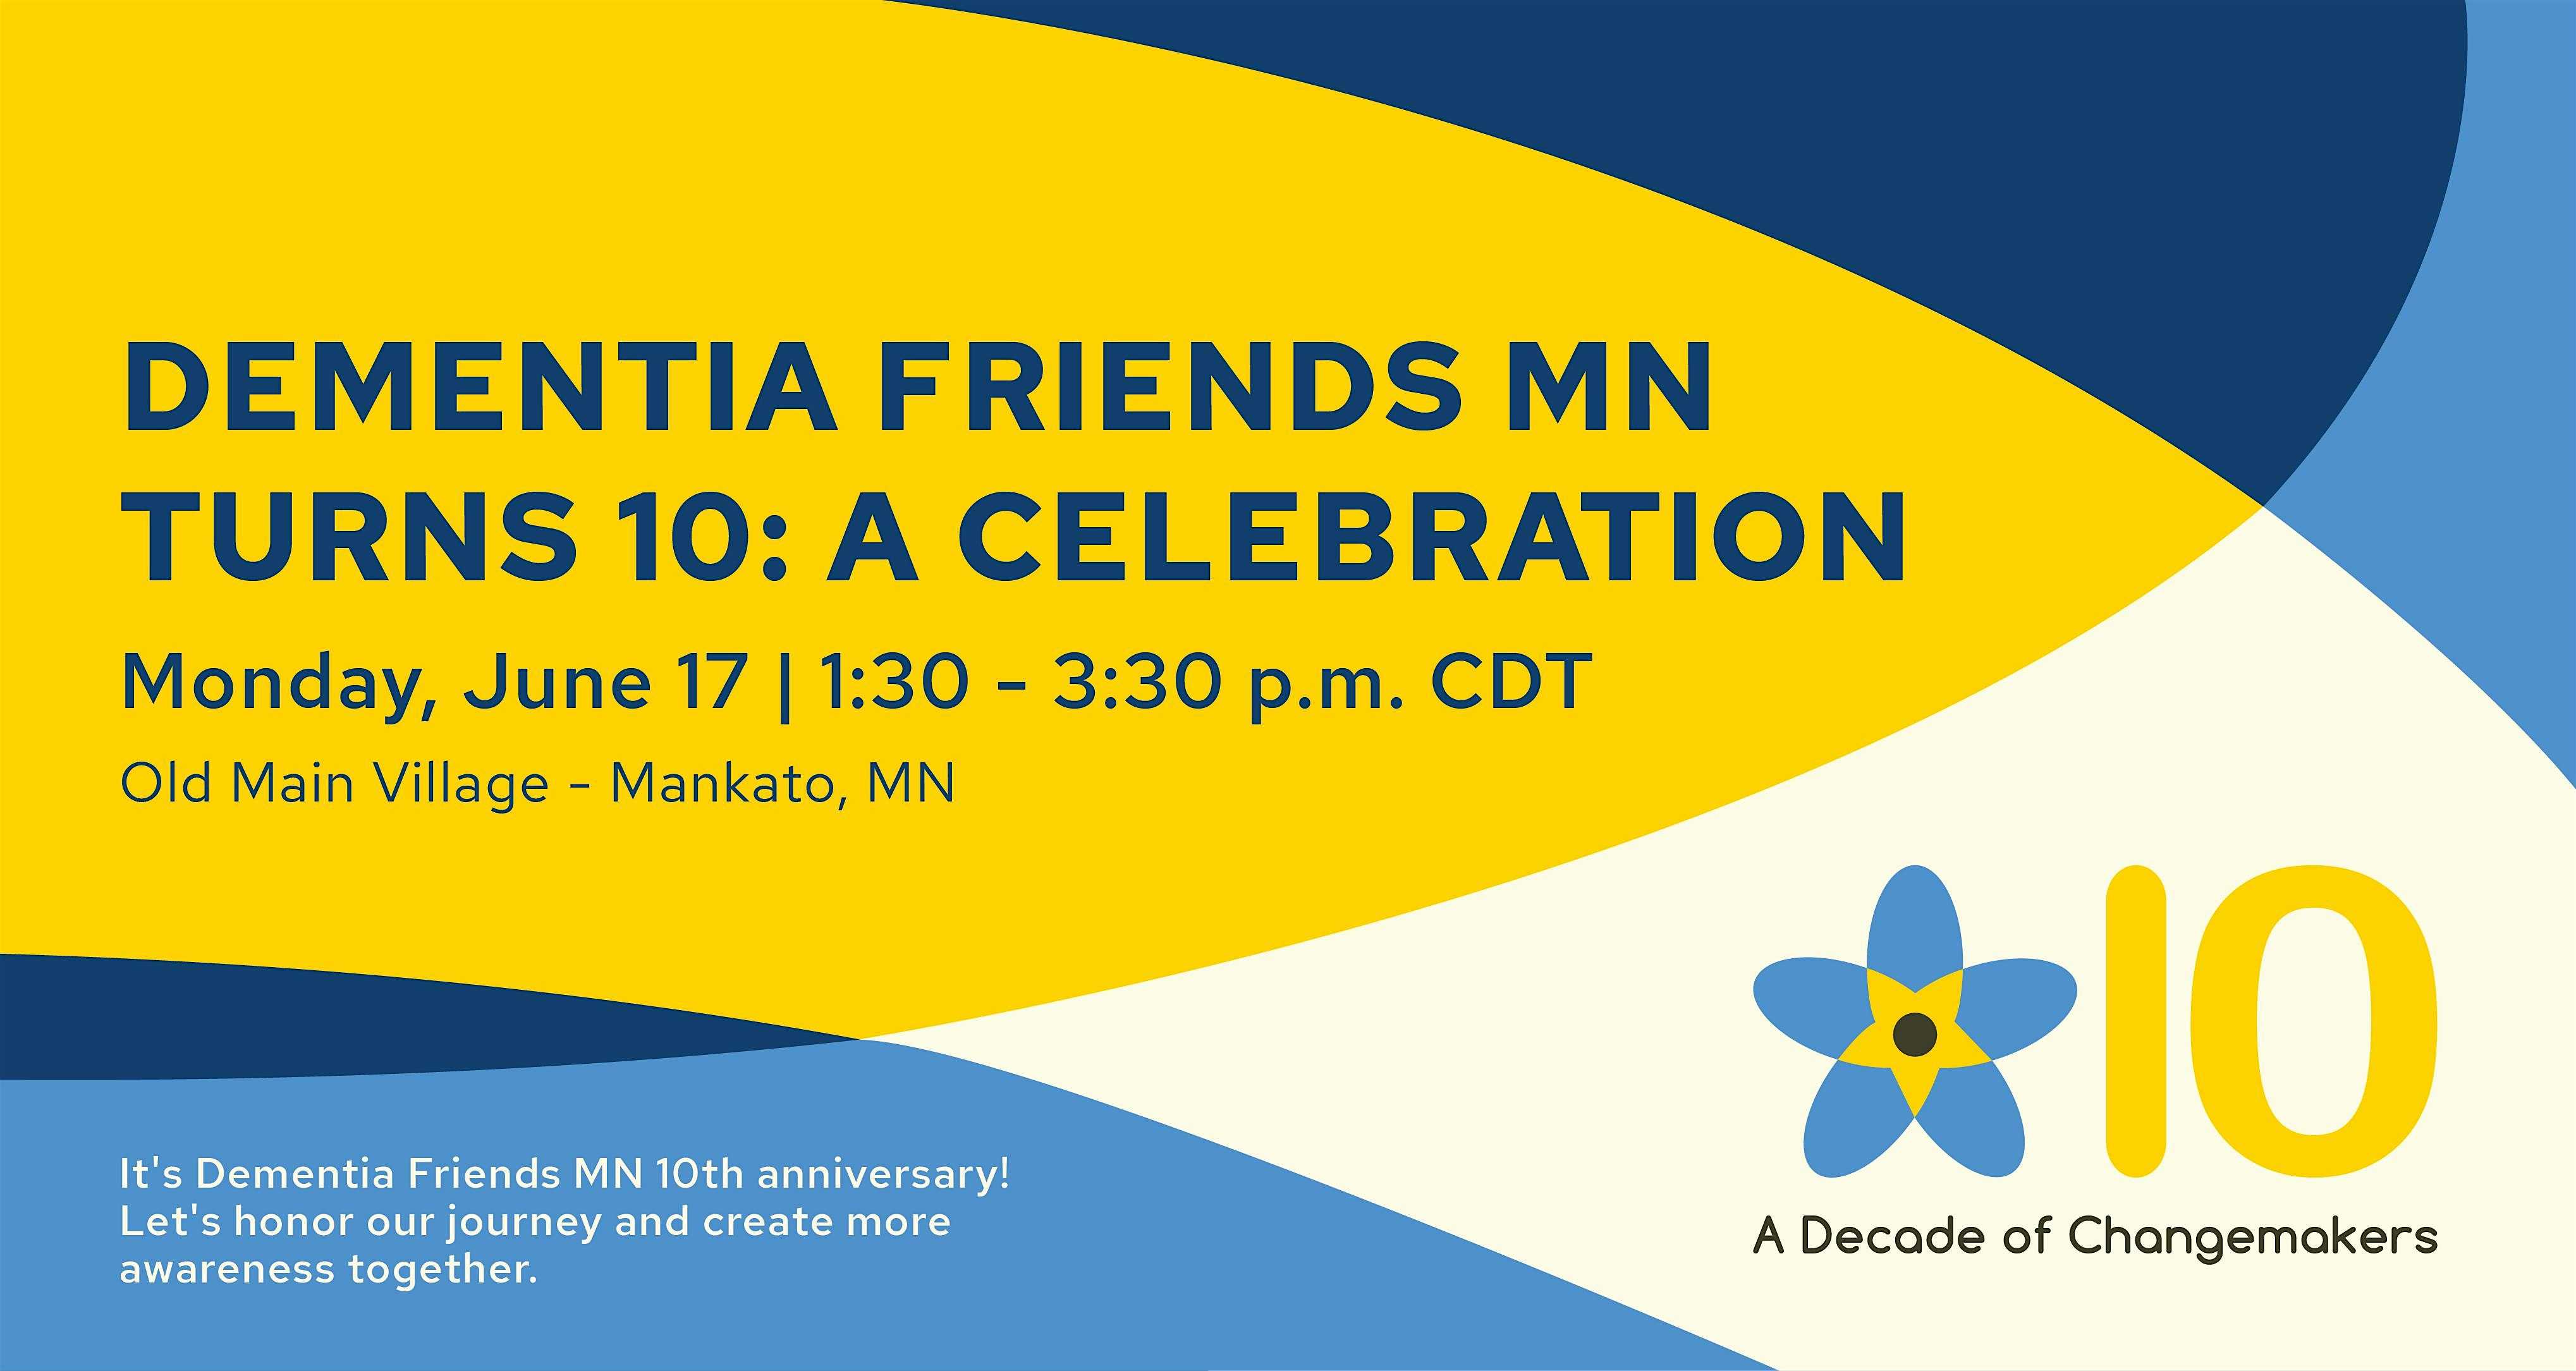 Mankato Regional Gathering to Celebrate Dementia Friends 10th Anniversary